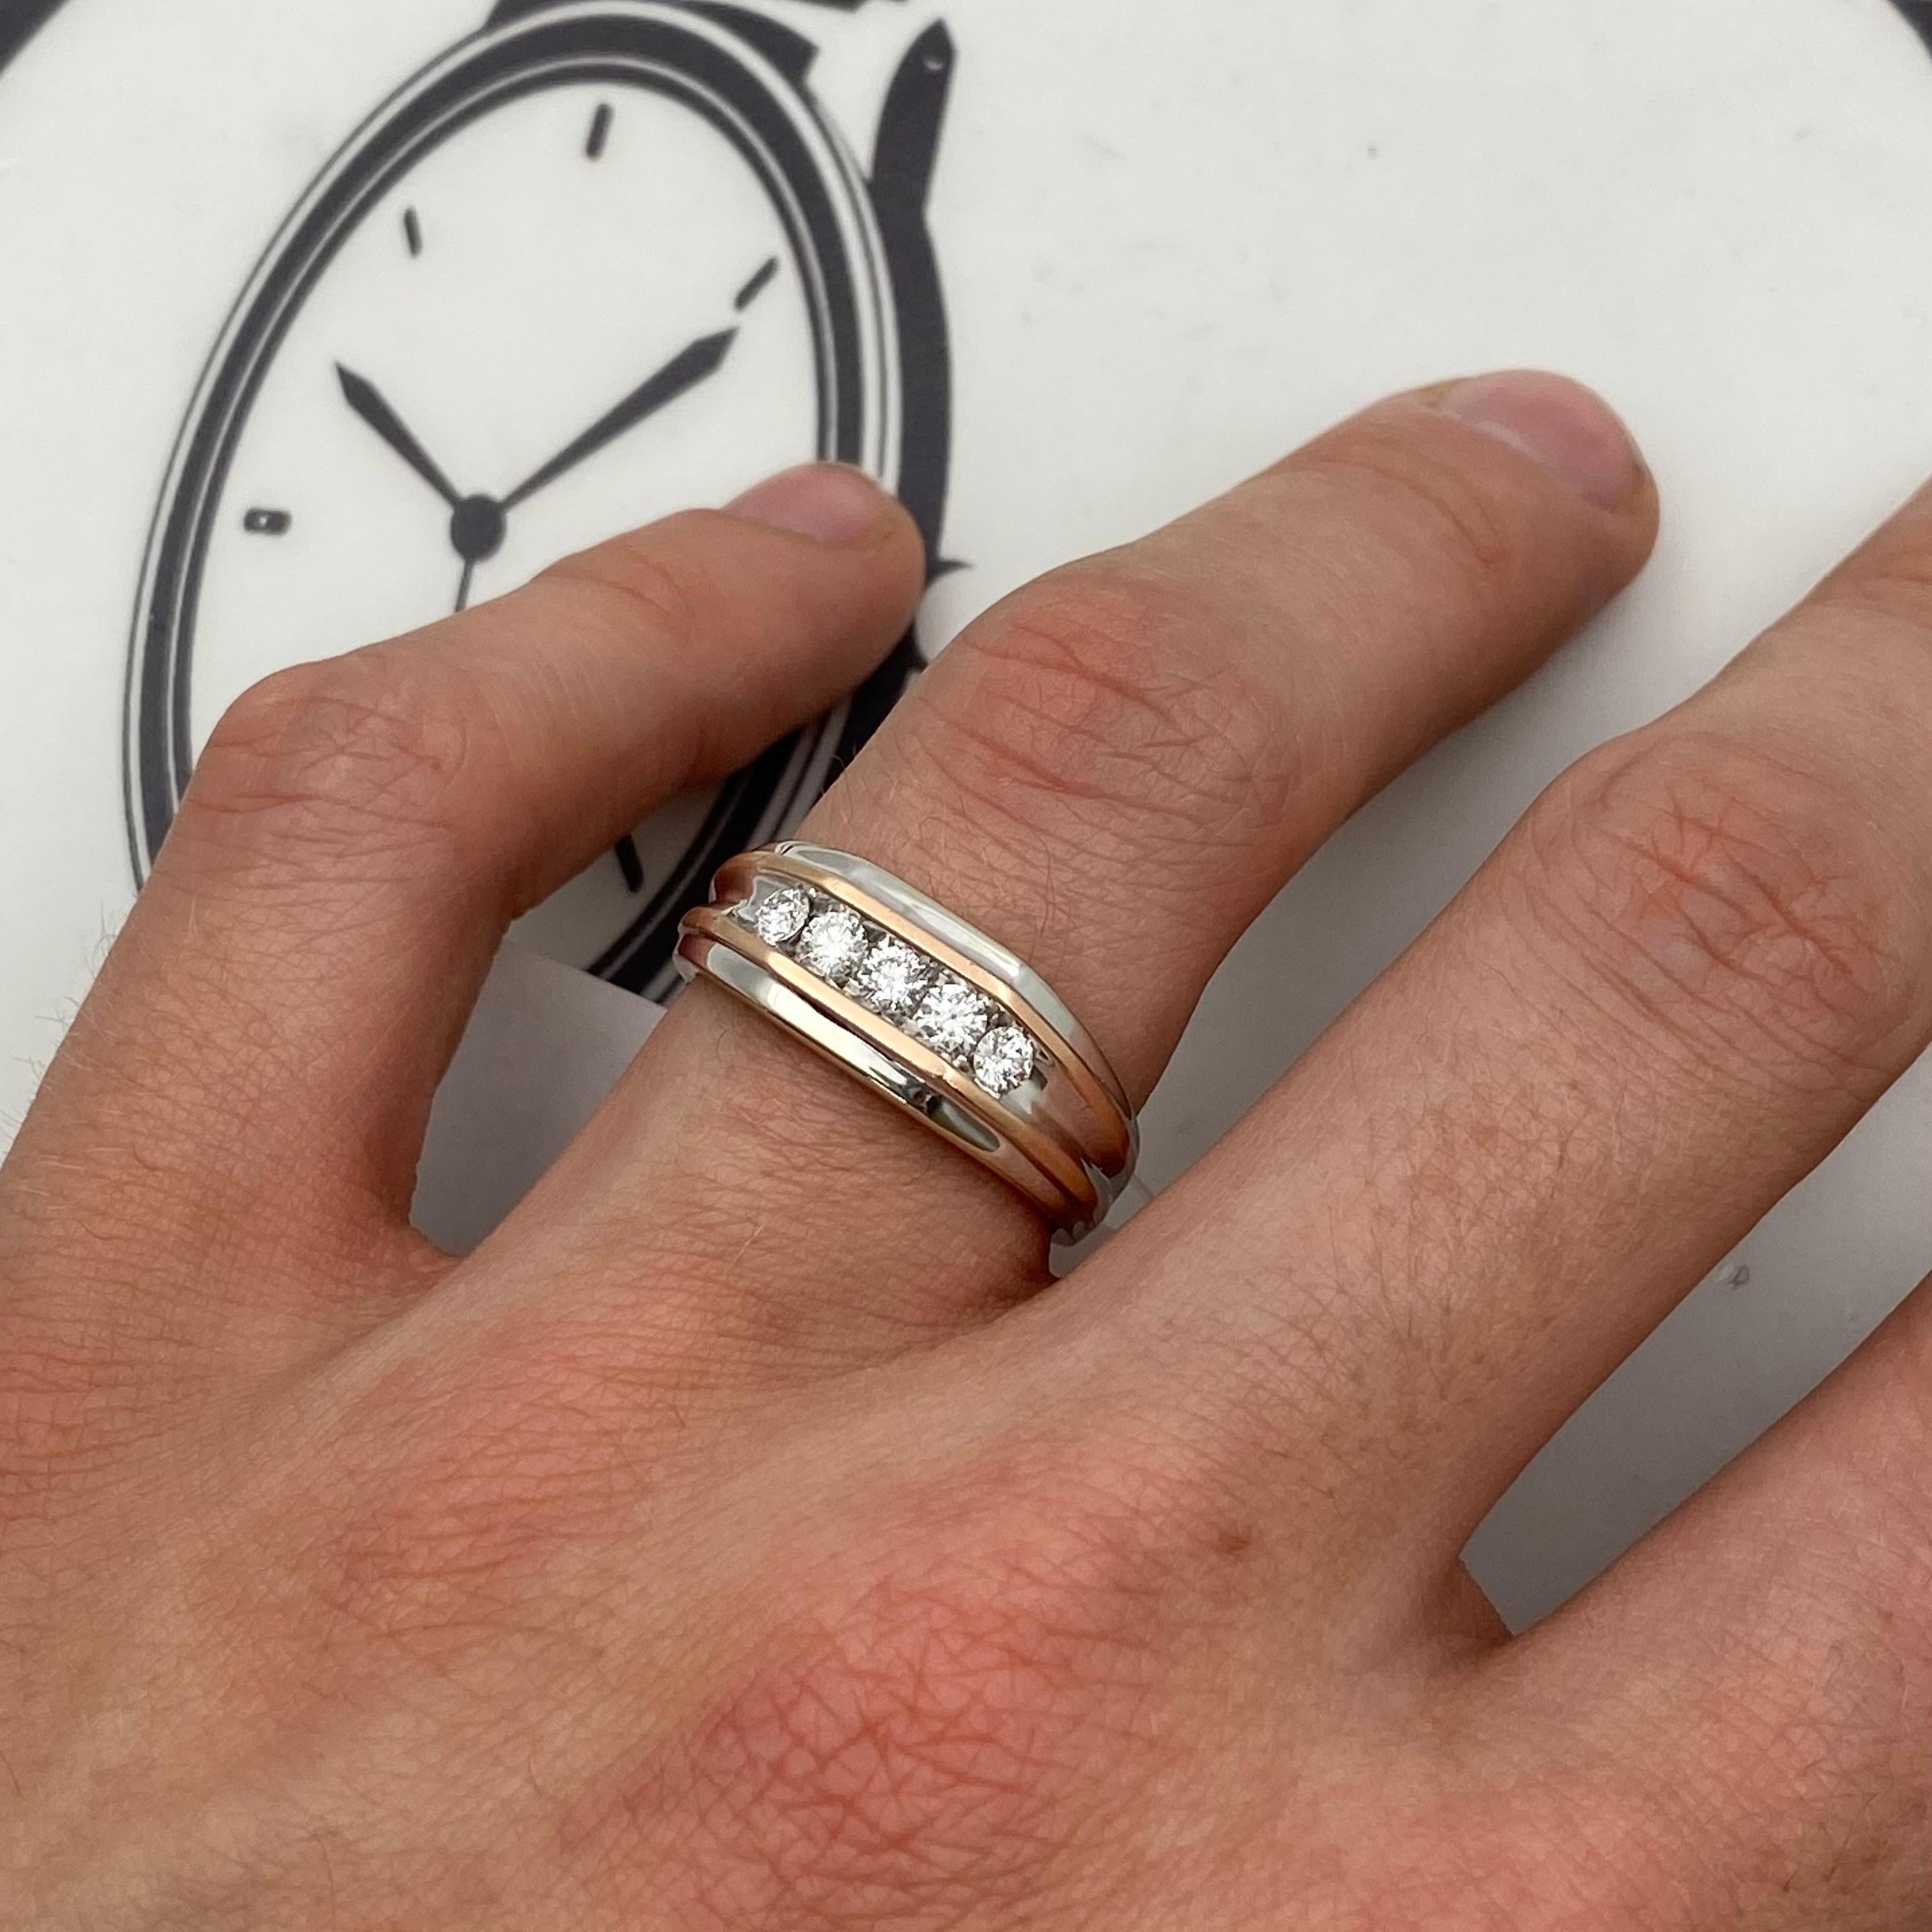 Rachel Koen Round Cut Diamond Men's Wedding Band 10k White Gold 0.50cttw Size 10 2